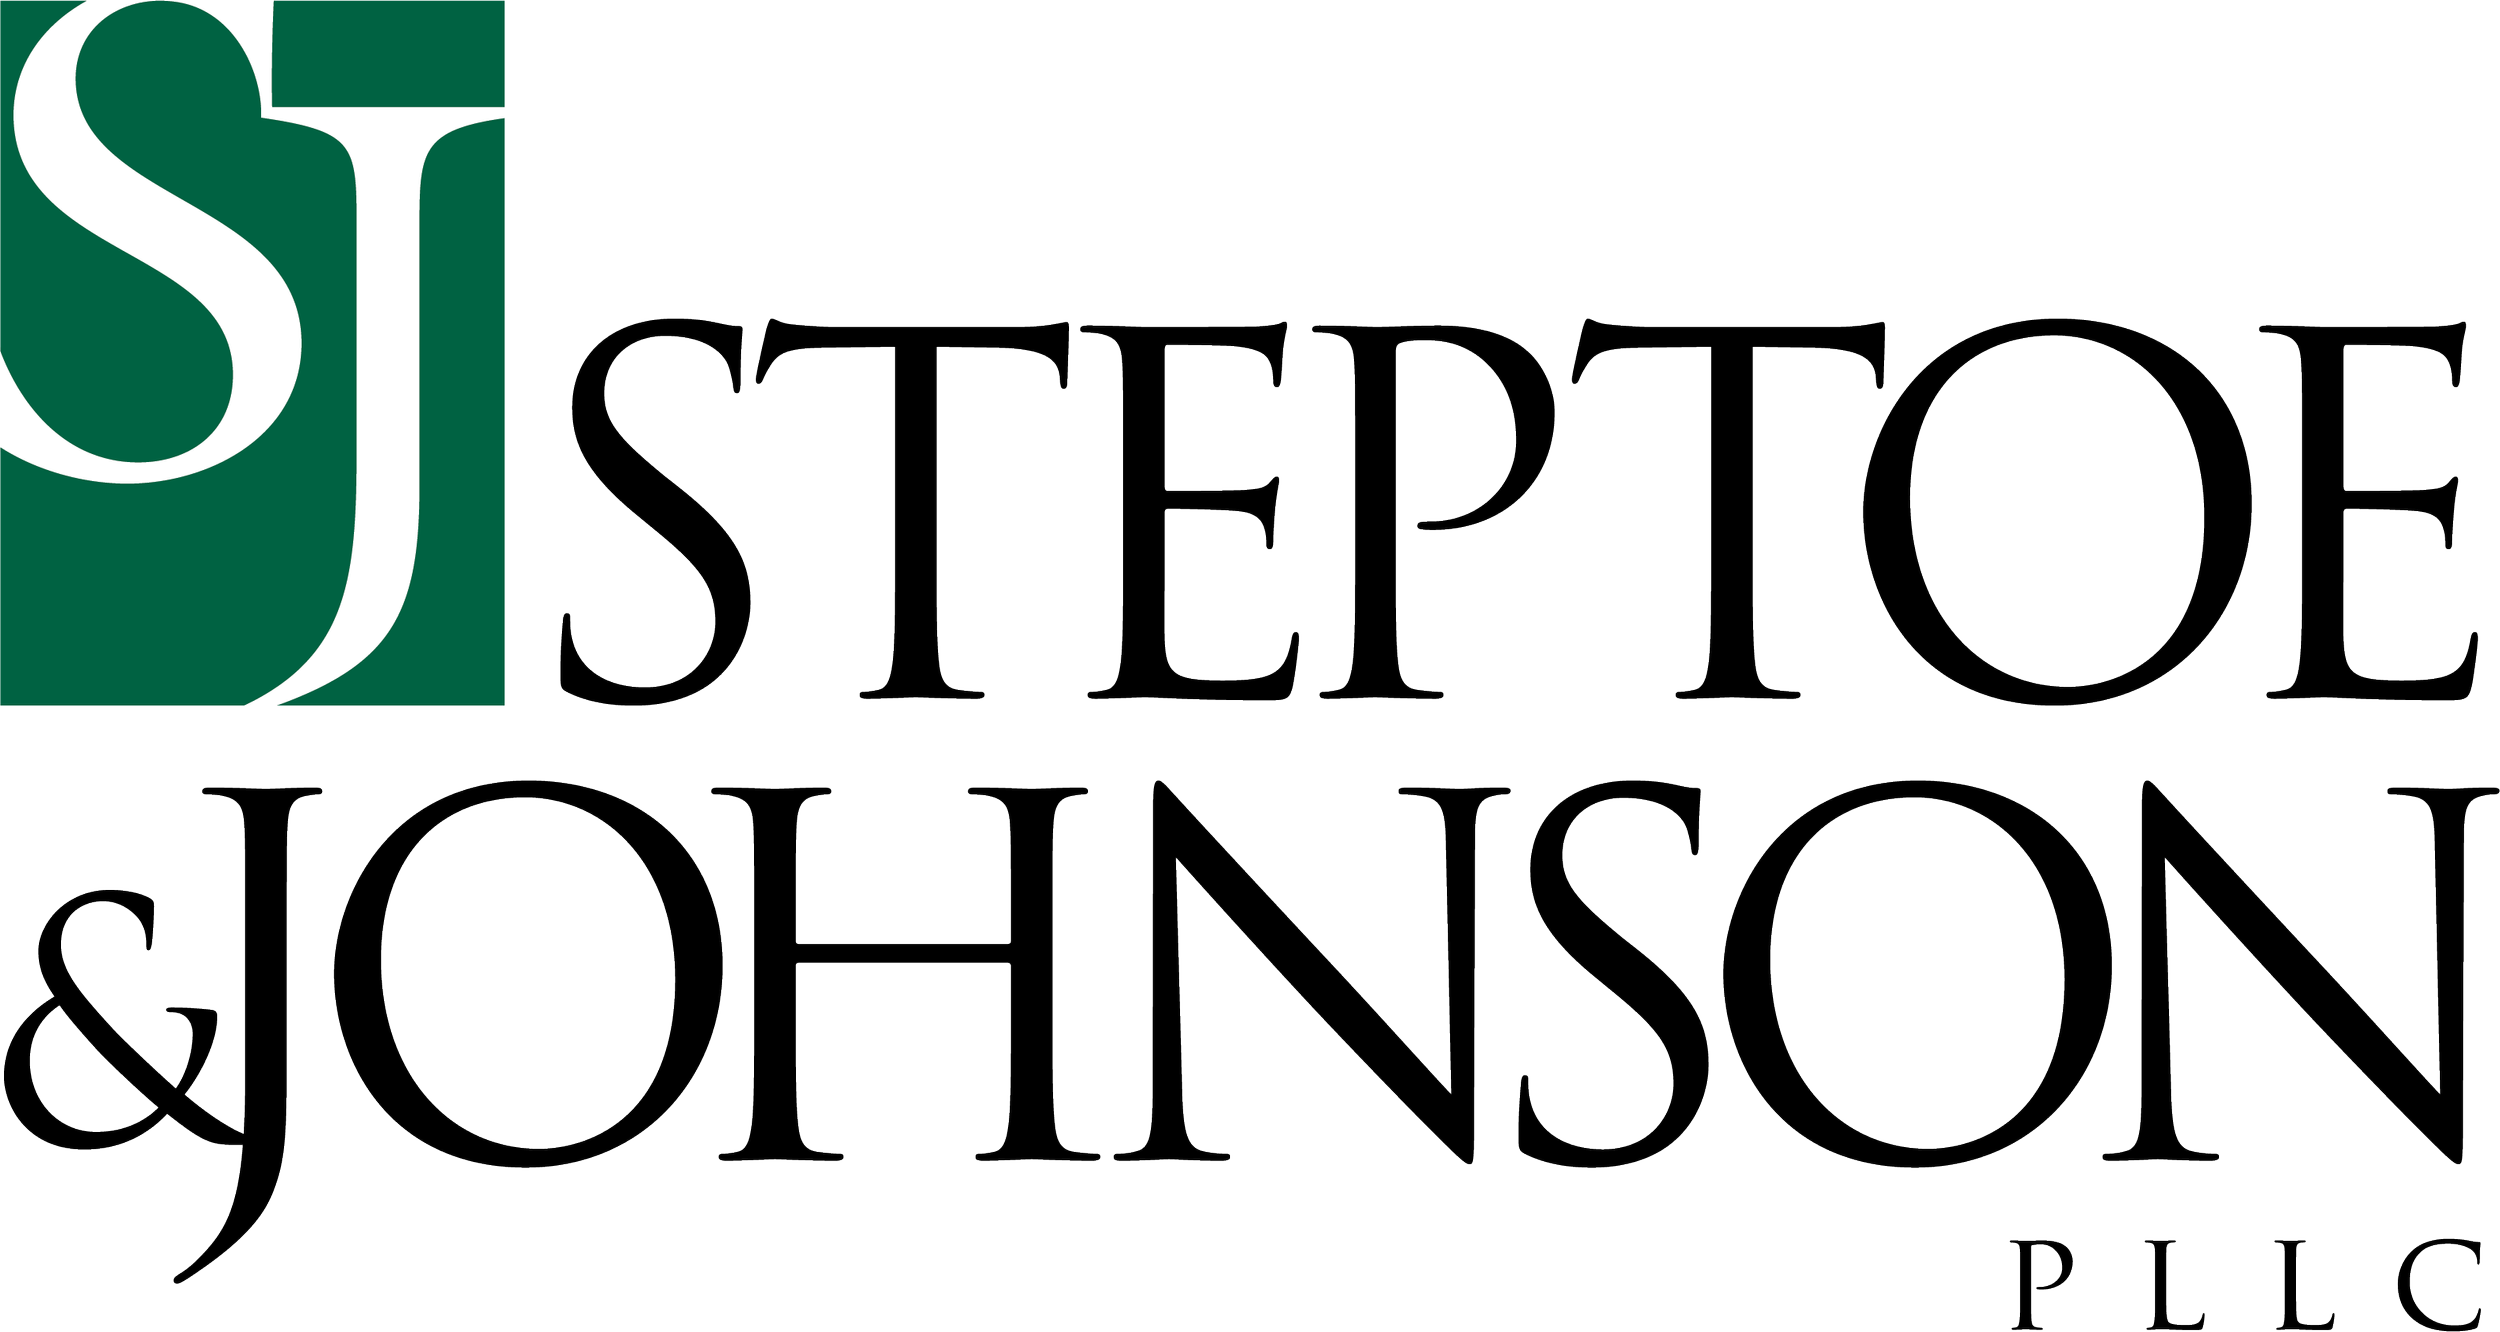 sj-logo-black-font.png